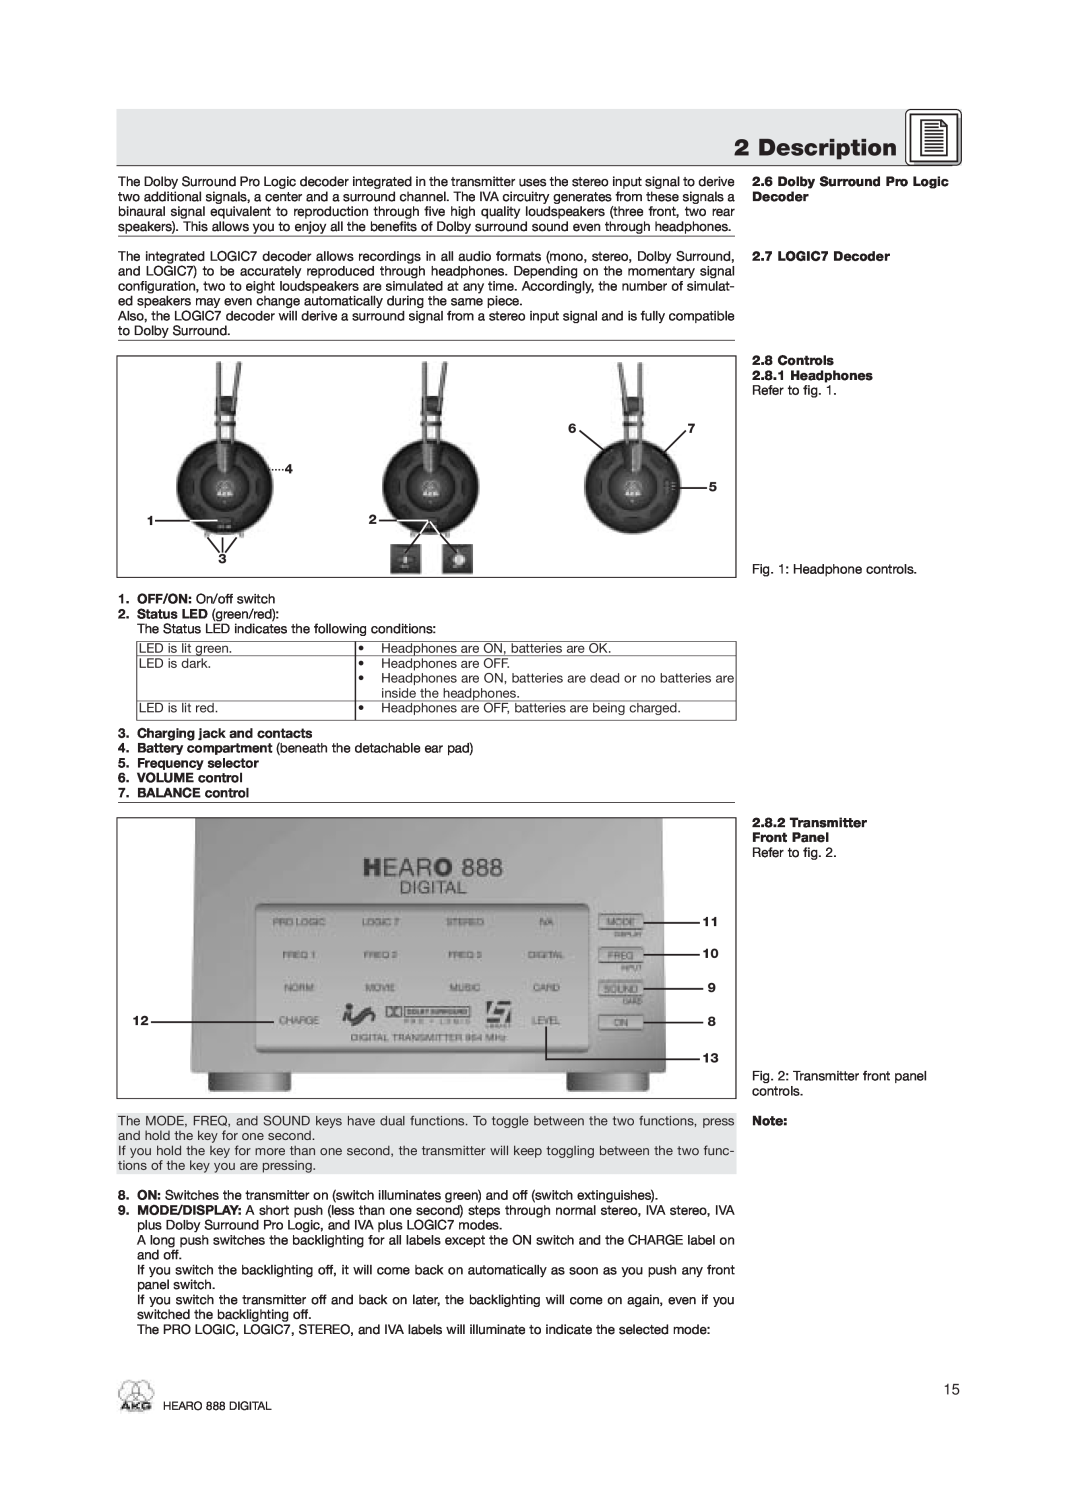 AKG Acoustics HEARO 888 specifications Description, Dolby Surround Pro Logic 